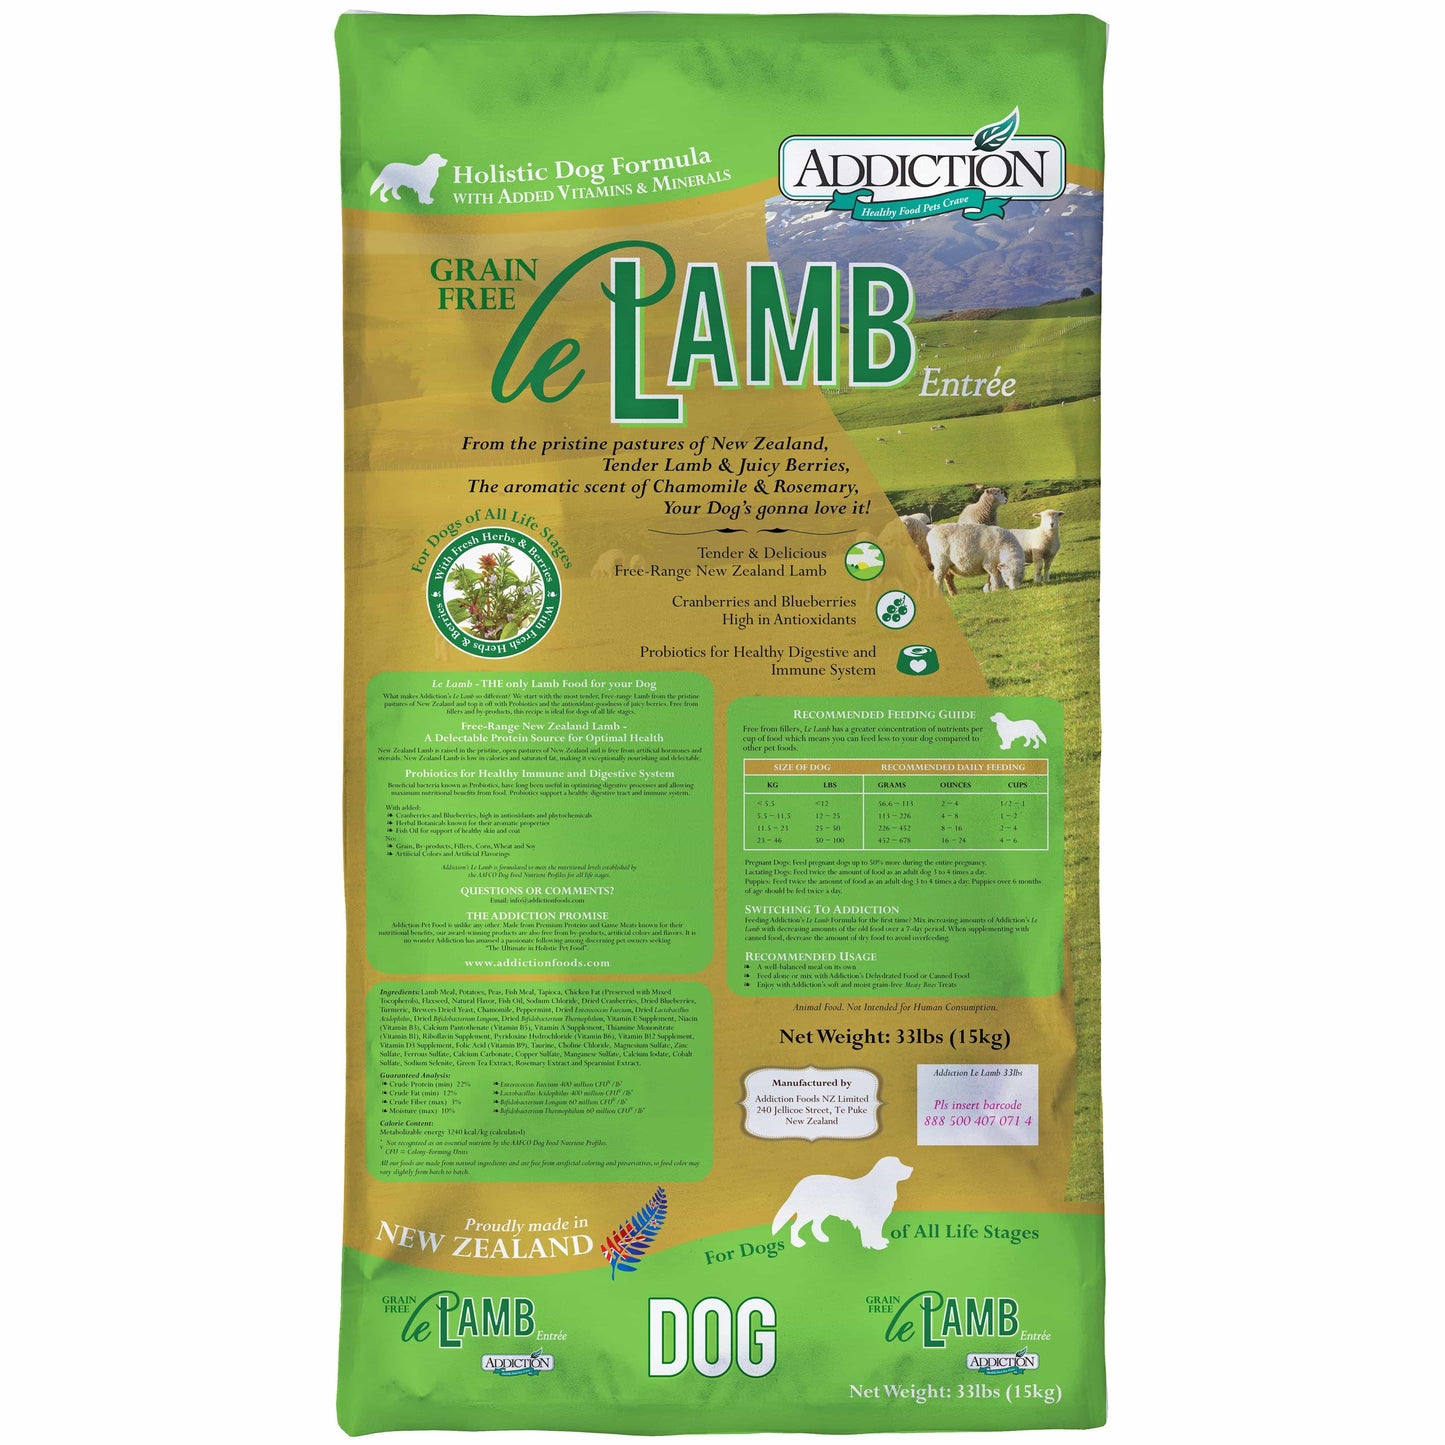 Addiction Le Lamb, Complete & Balanced, Digestive Health Dry Dog Food